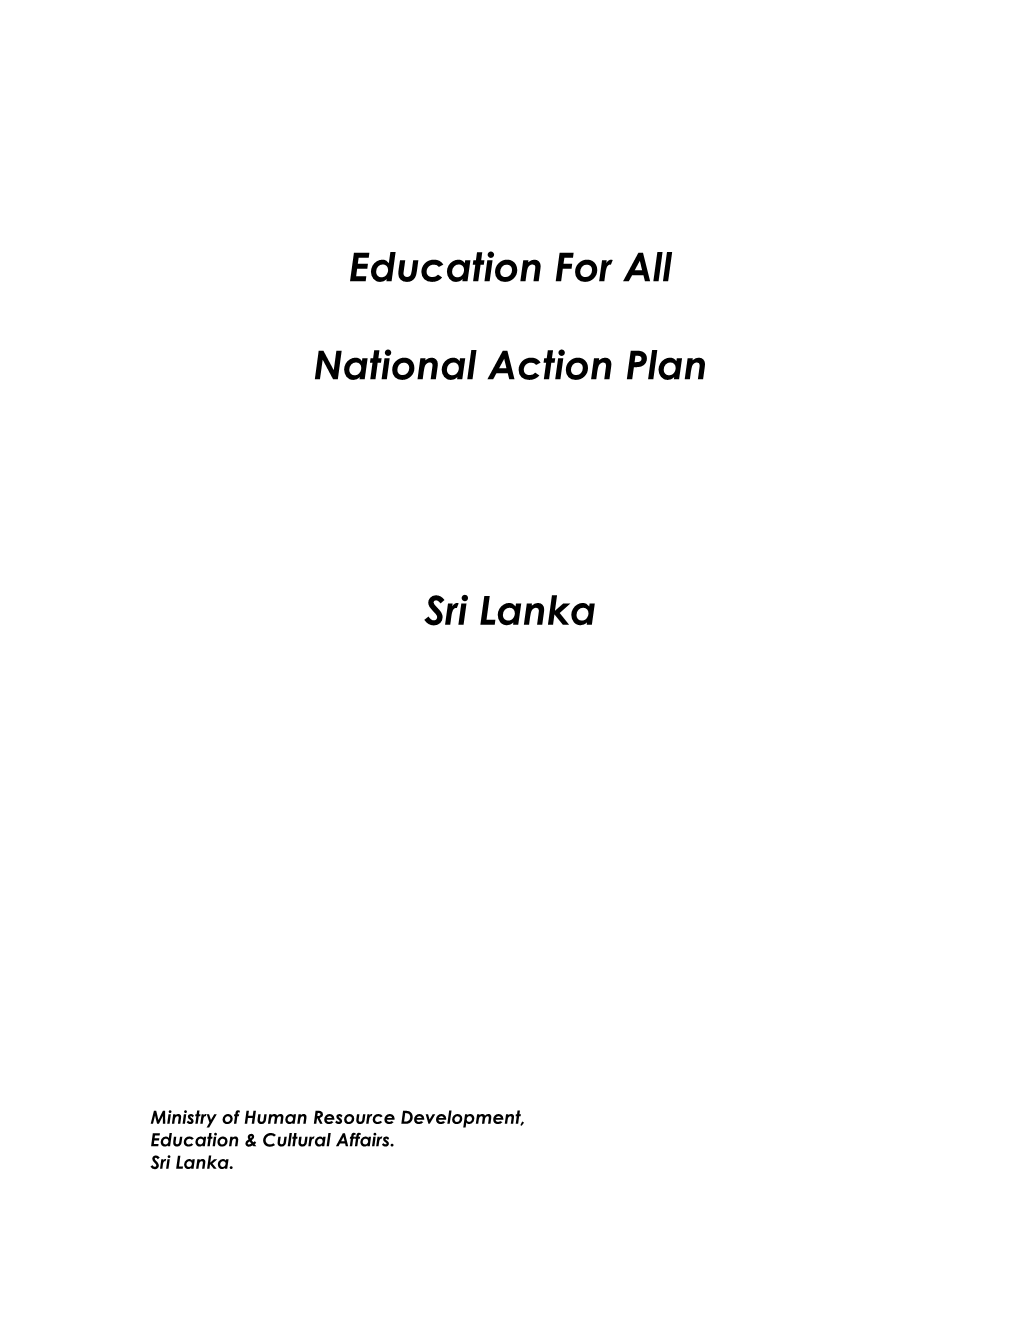 Education for All National Action Plan Sri Lanka